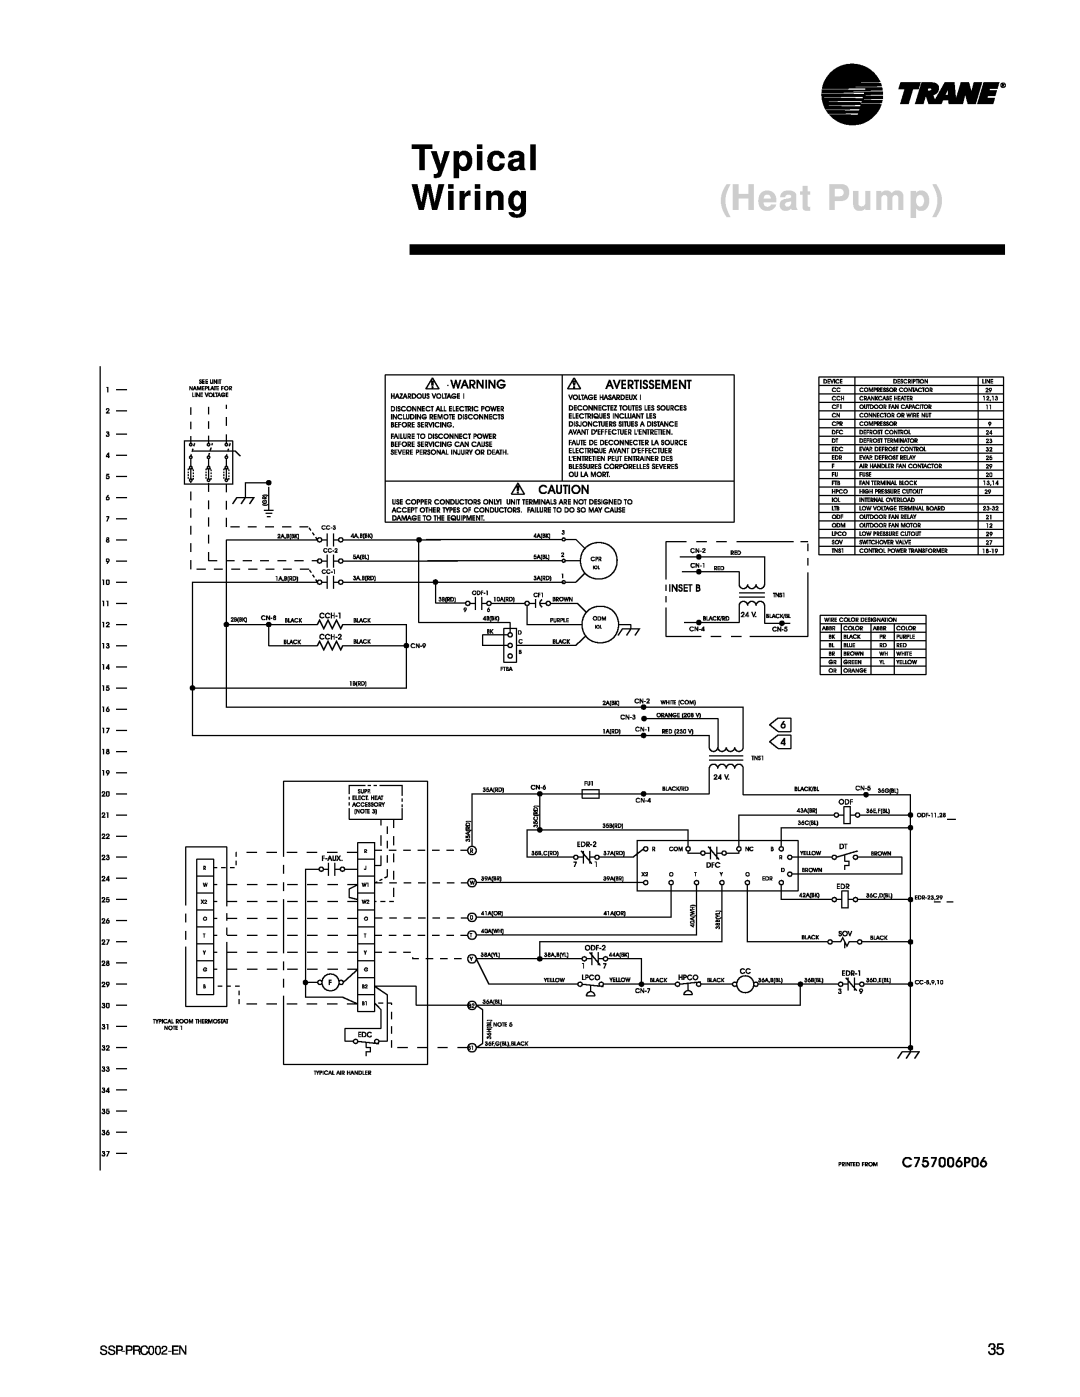 Trane TWE050A, TWA075A, TWE200B, TWA200B manual Typical, Wiring, Heat Pump 